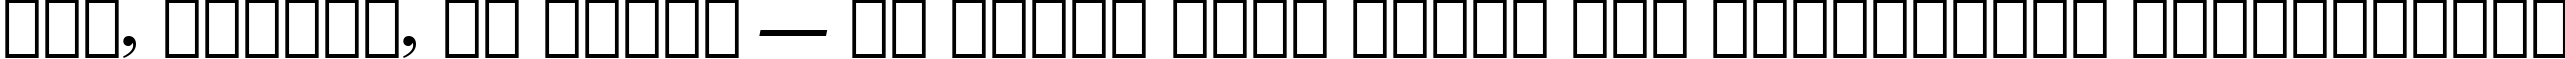 Пример написания шрифтом Bodoni Bold Italic BT текста на украинском